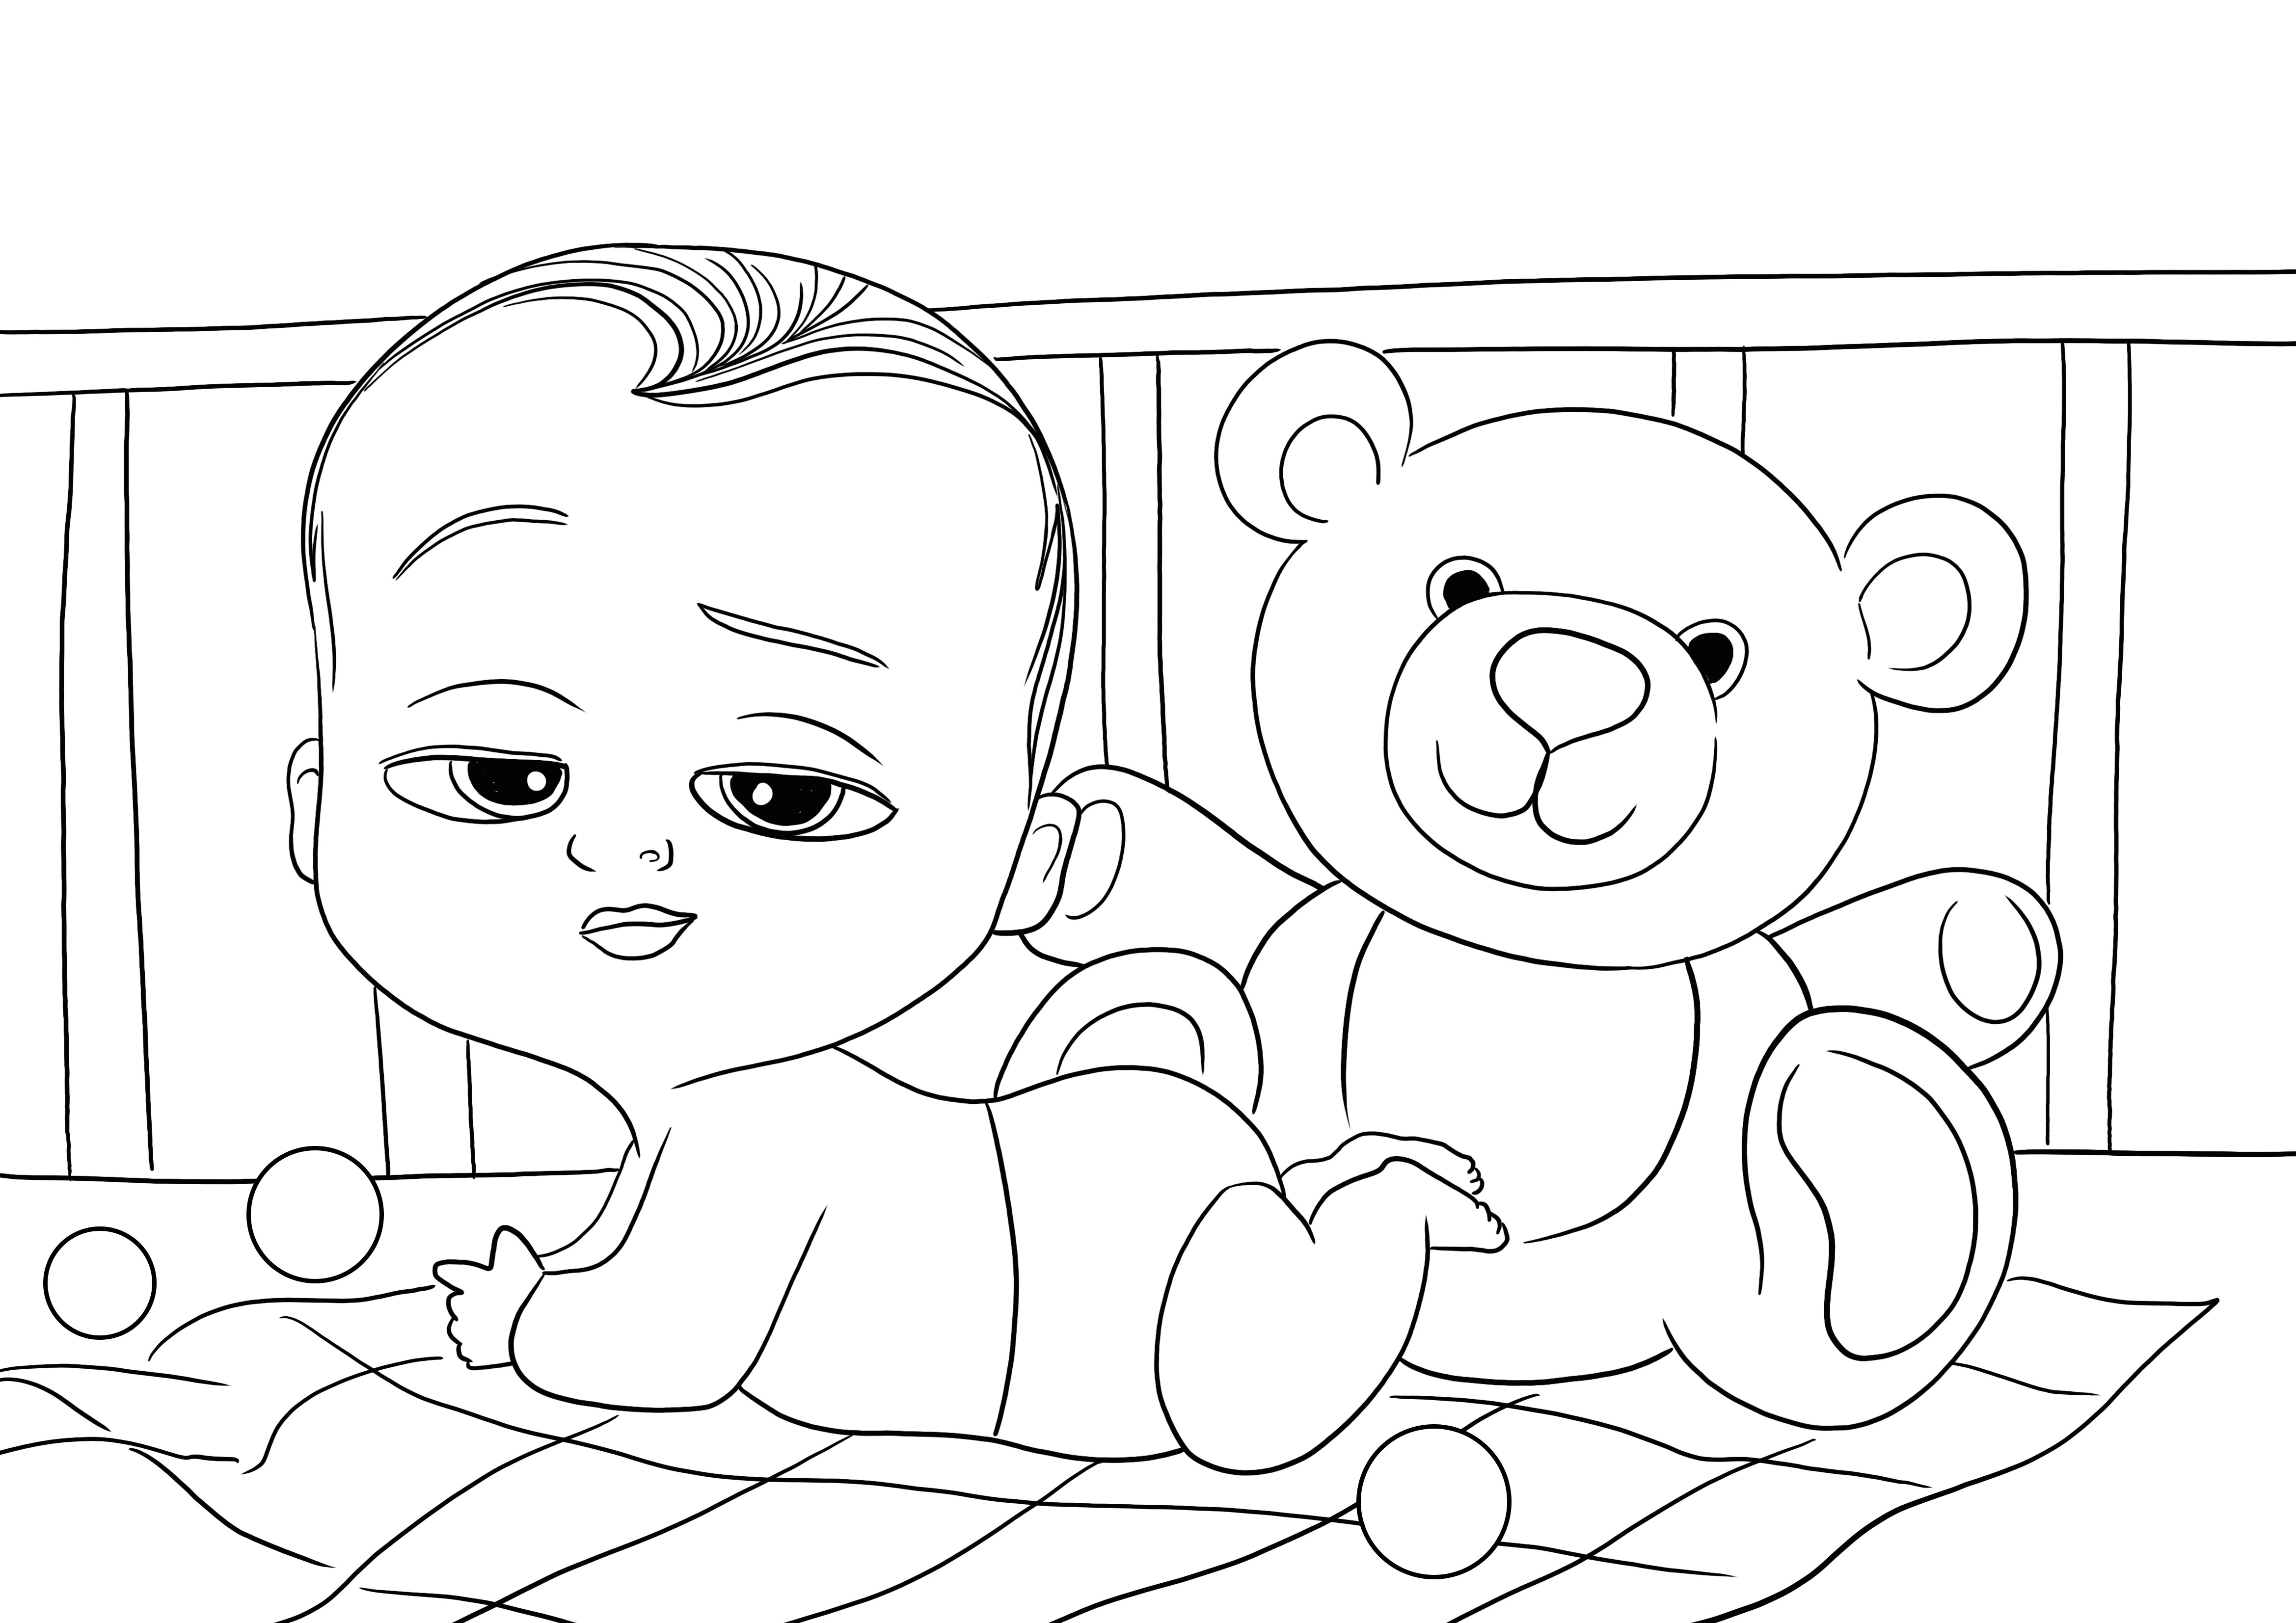 Grátis para baixar a imagem para colorir de Baby Boss e Teddy Bear para colorir